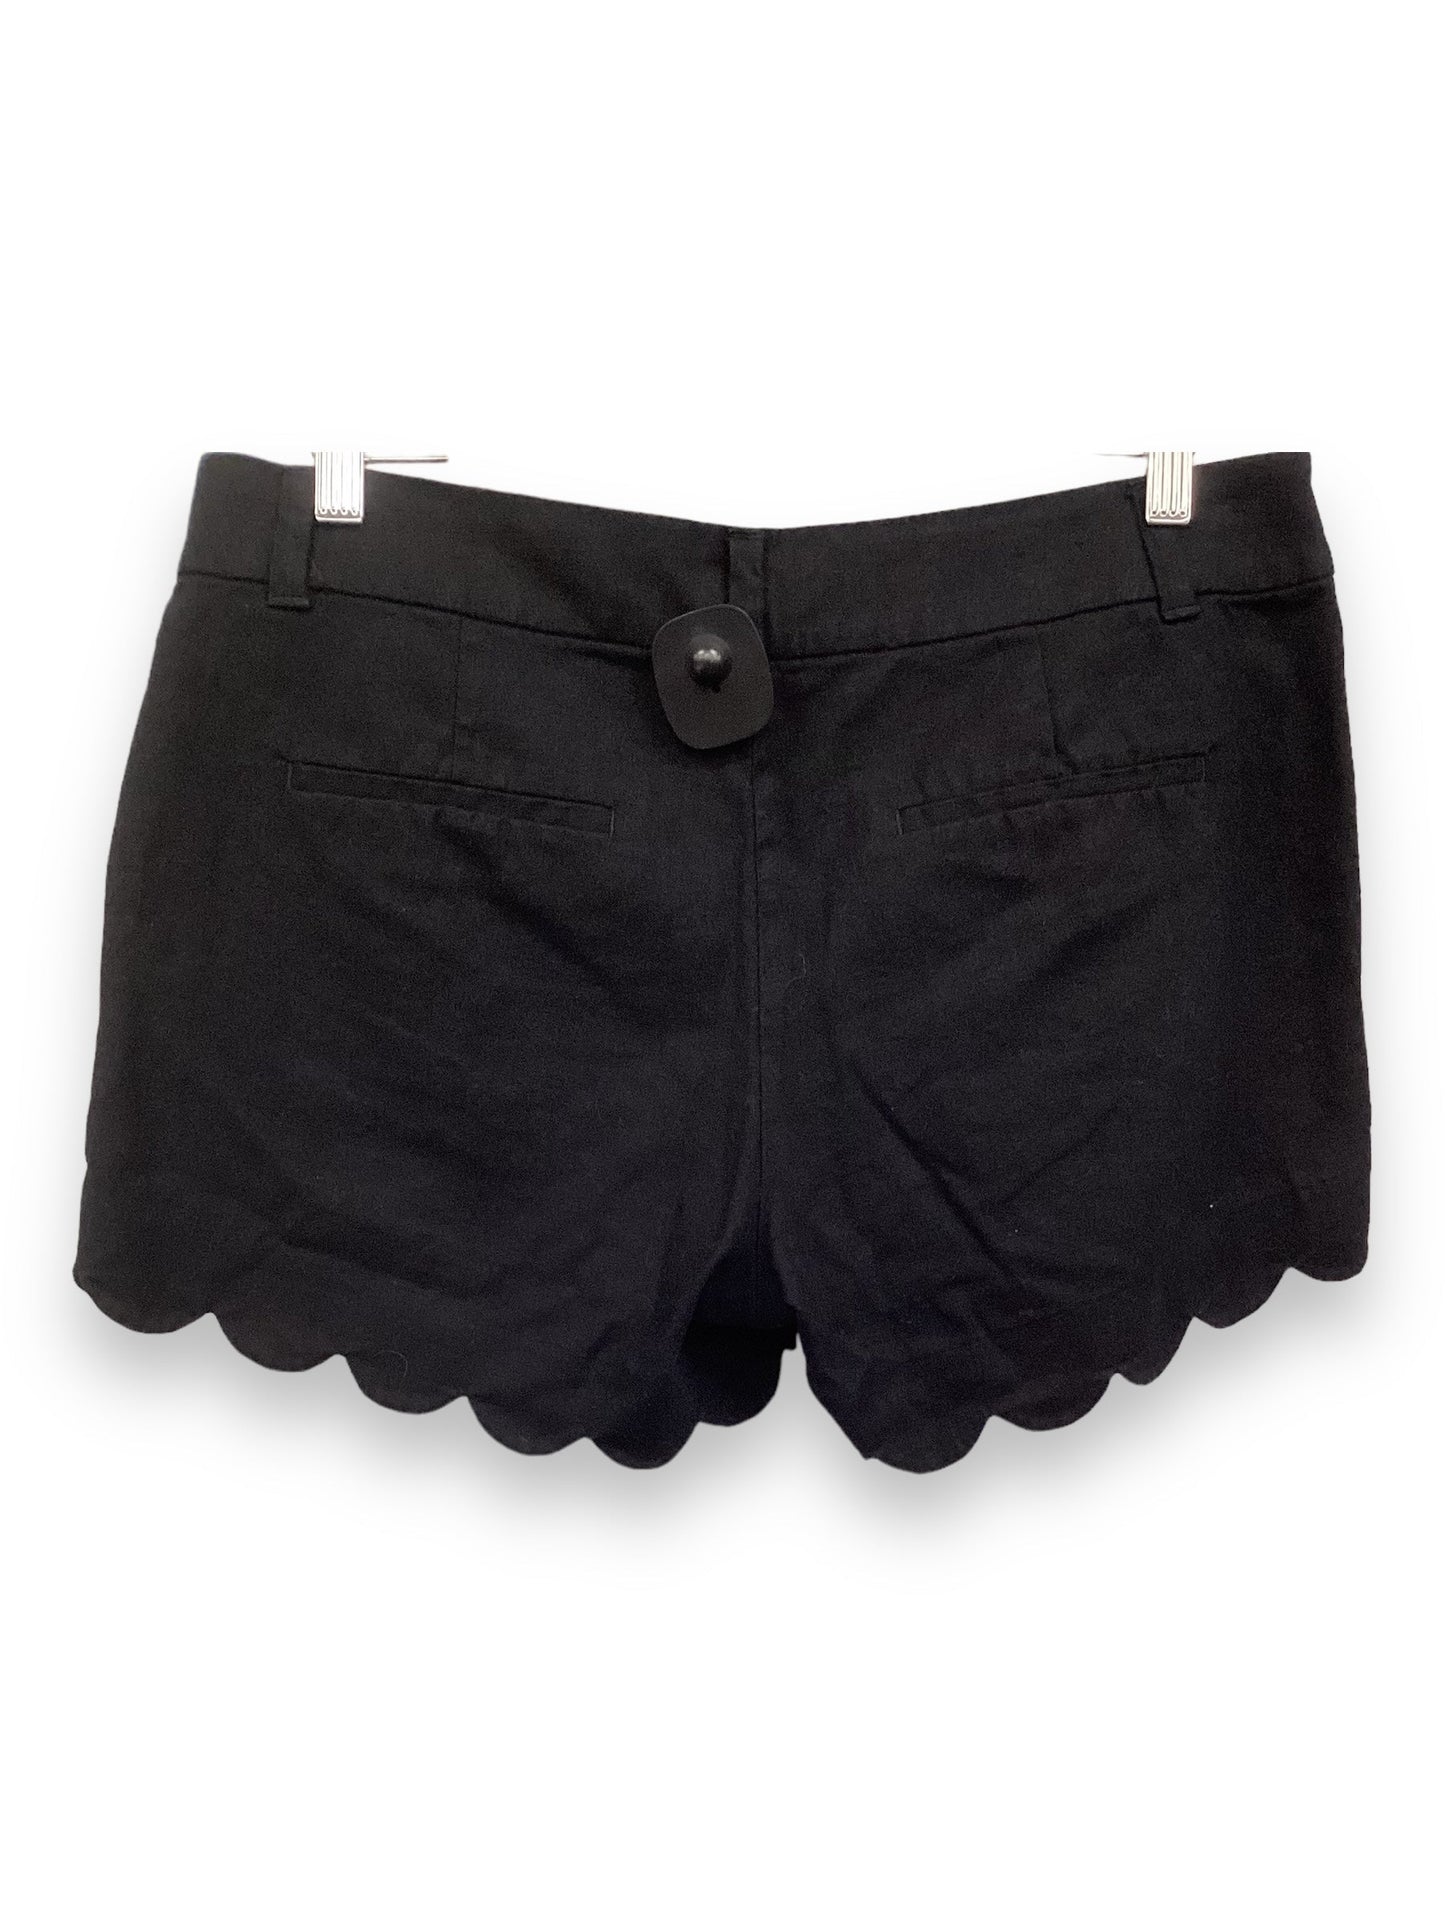 Black Shorts J. Crew, Size 8